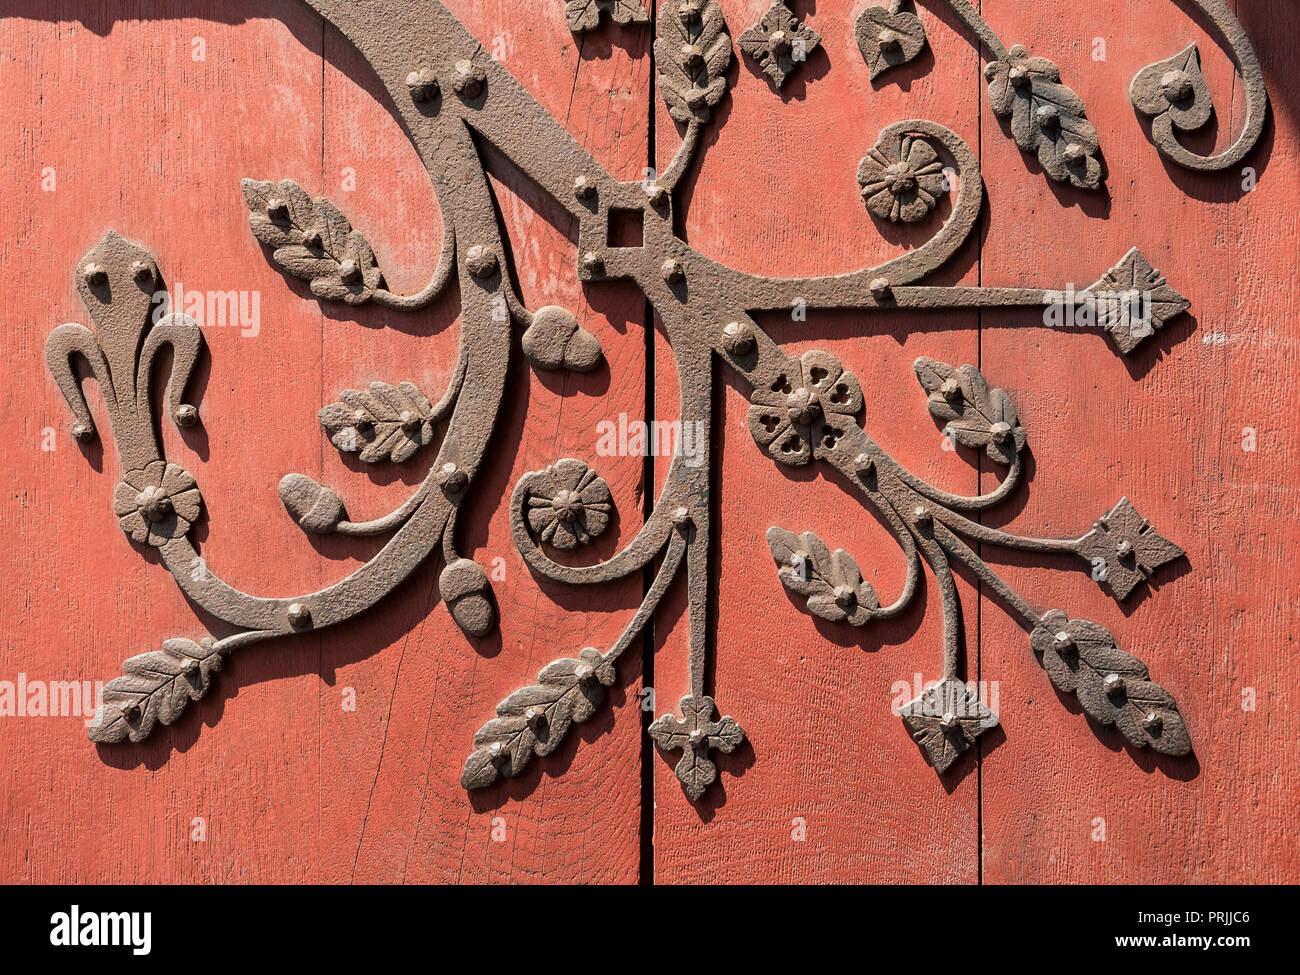 Ornate metal fittings on wooden door, Strasbourg, France Stock Photo